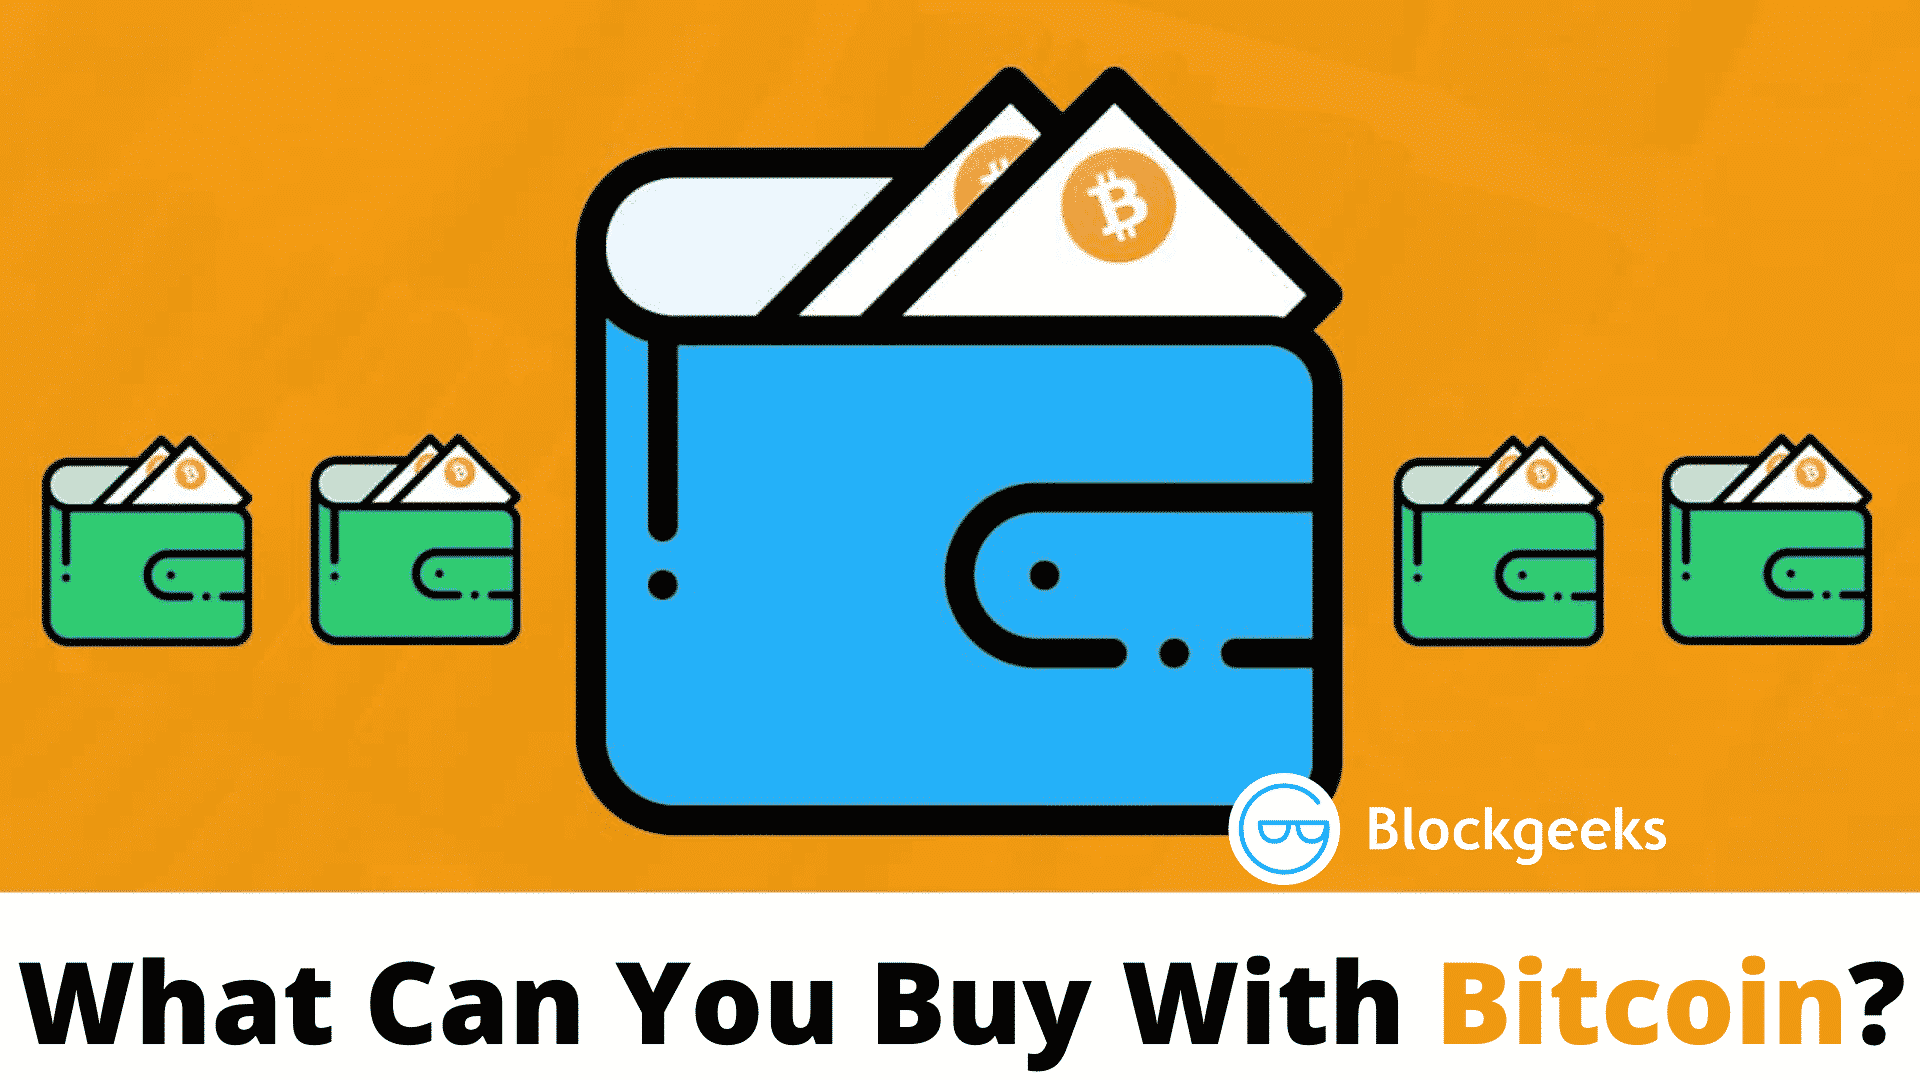 How to buy anything with bitcoin криптовалюта купить на бирже